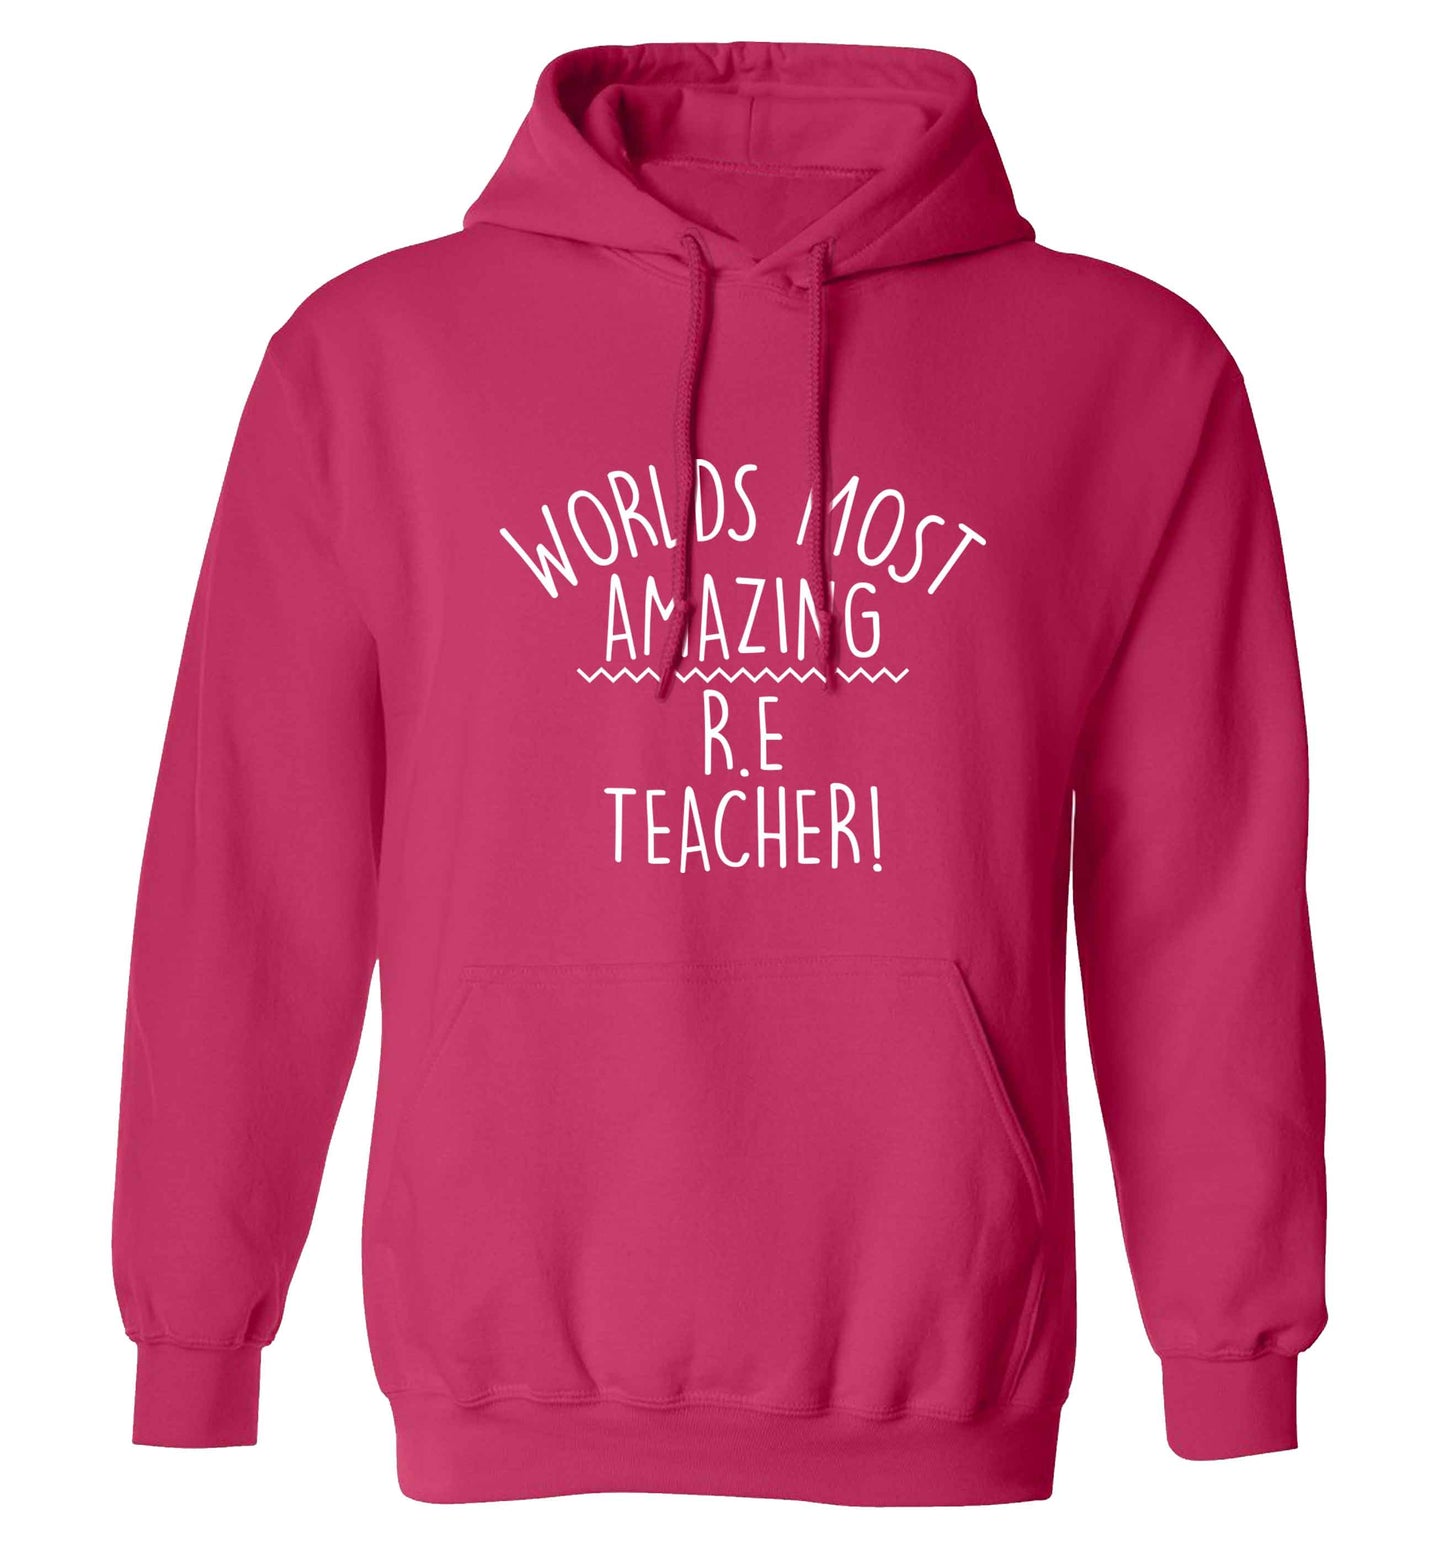 Worlds most amazing R.E teacher adults unisex pink hoodie 2XL